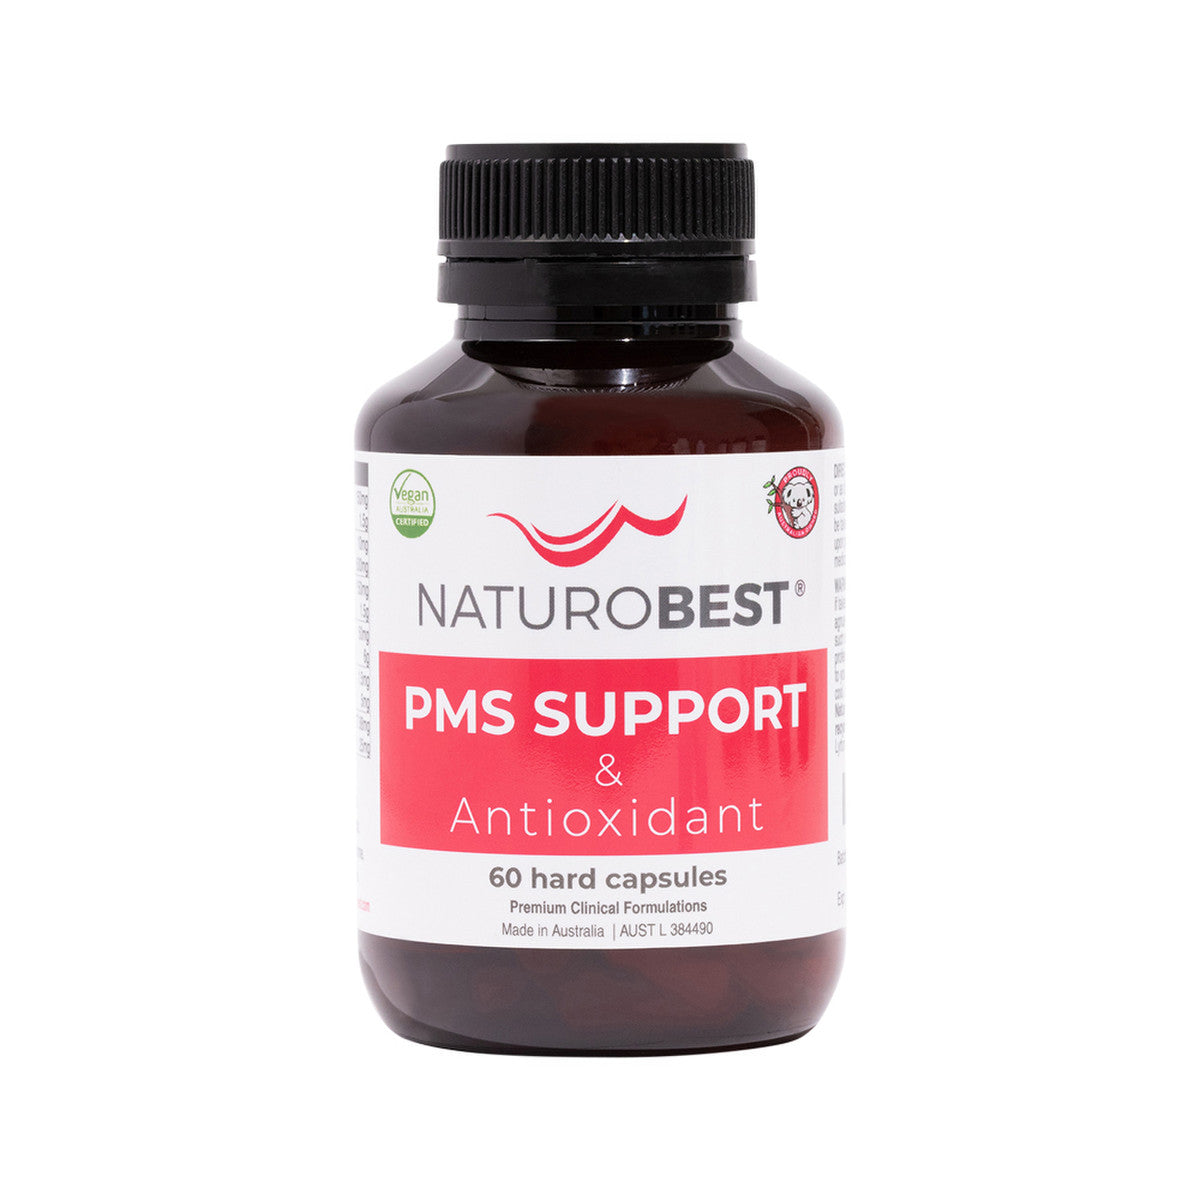 NaturoBest - PMS Support & Antioxidant